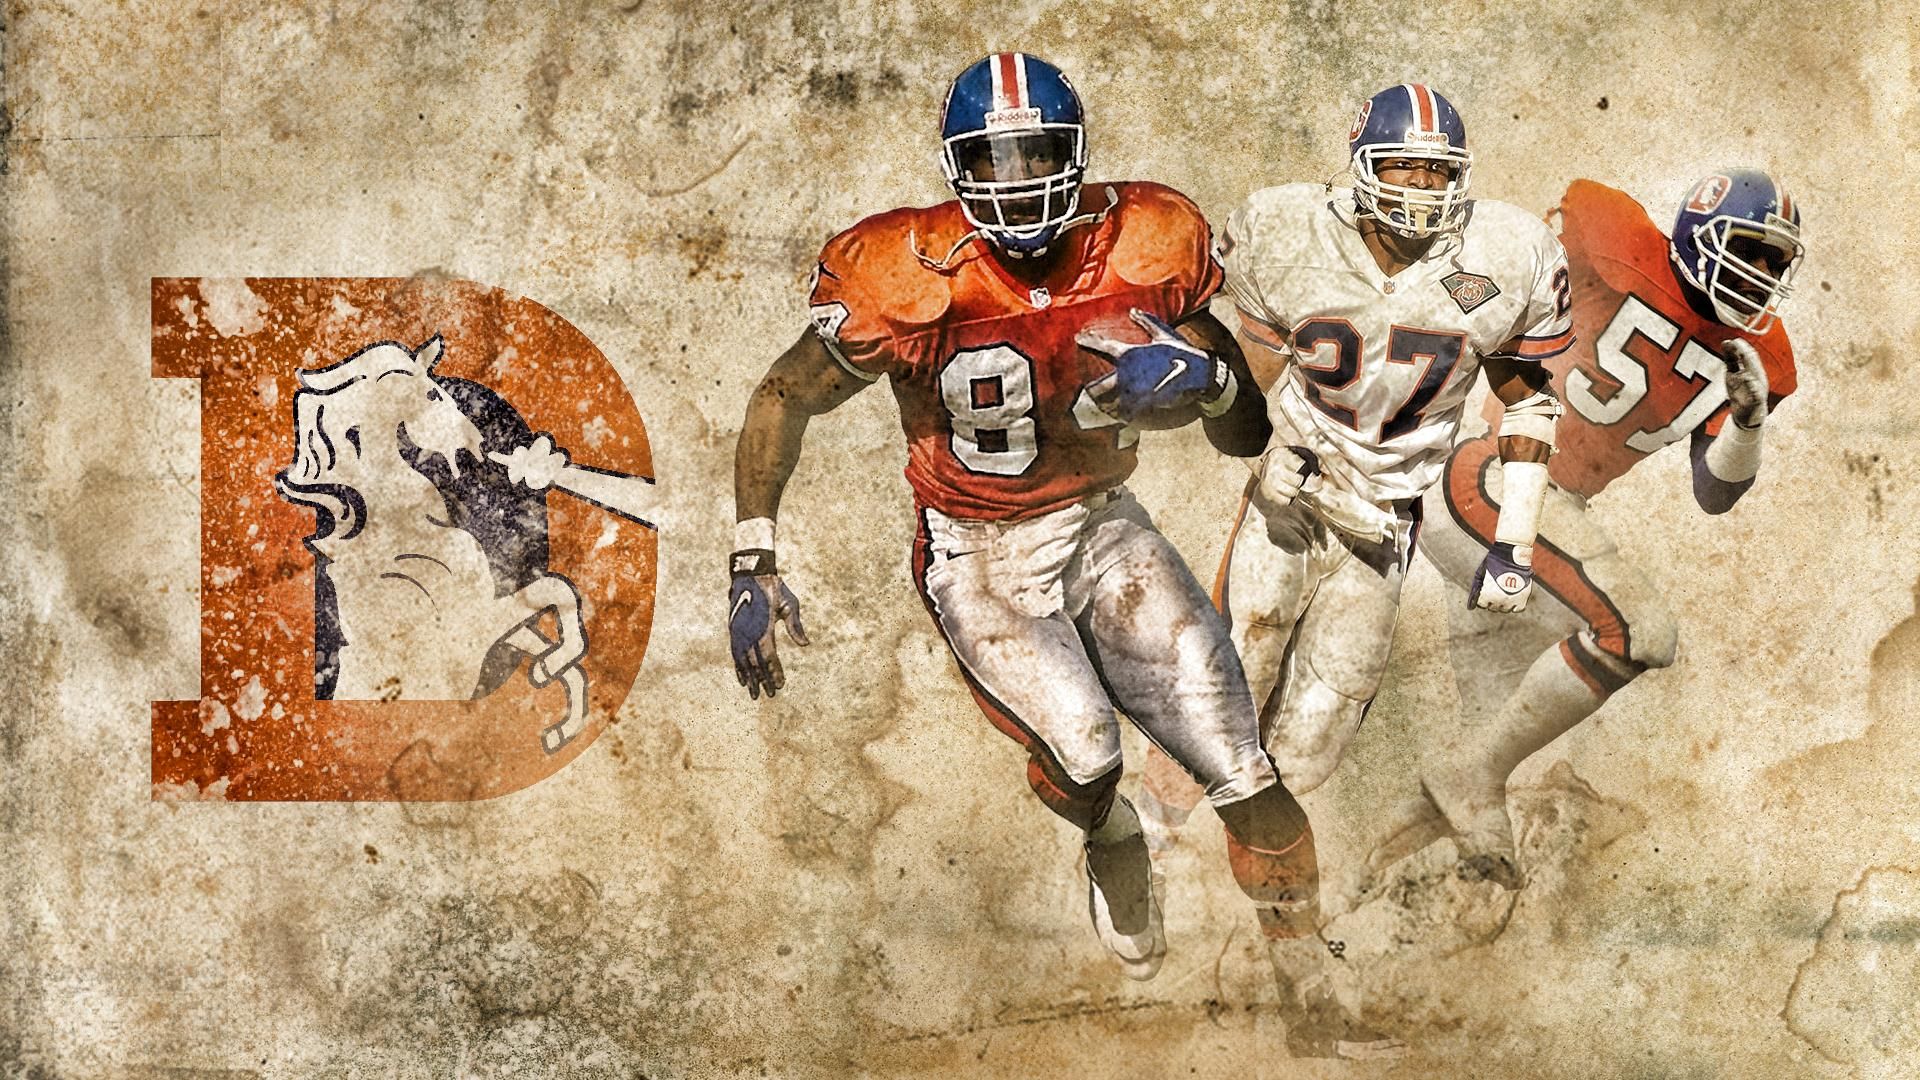 Broncos Cheerleaders, Nfl Football Teams, Football - Denver Broncos Wallpaper Hd , HD Wallpaper & Backgrounds